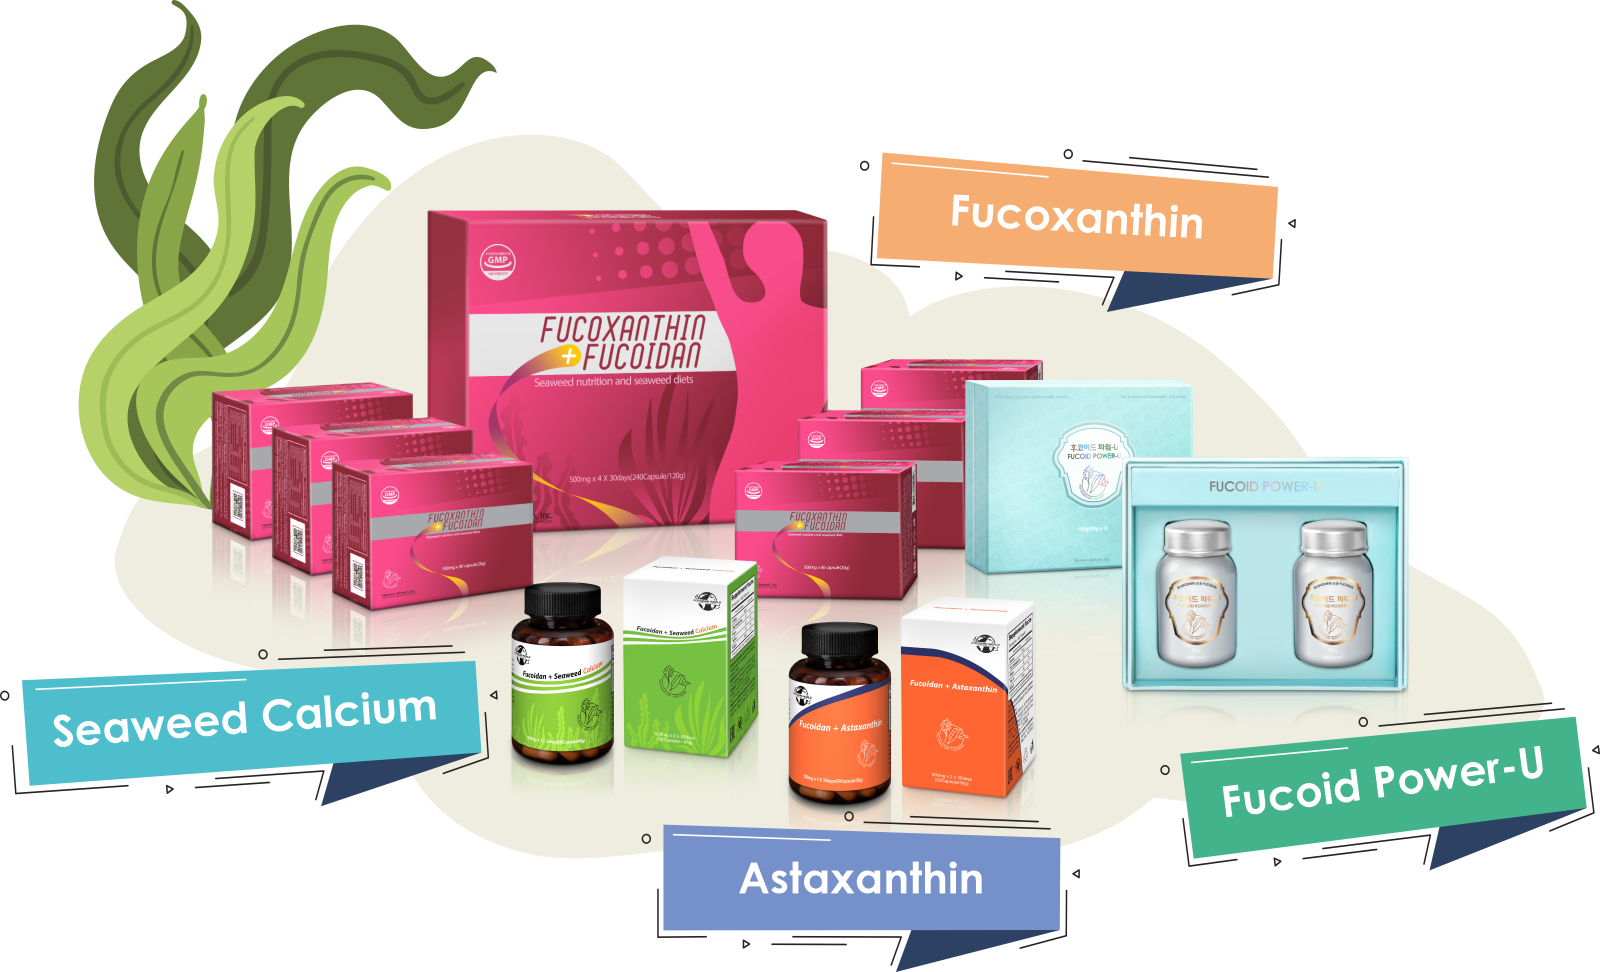 Продукты с фукоиданом Fucoxanthin + Fucoidan, Fucoid Power-U, Fucoidan + Seaweed Calcium, Fucoidan + Astaxanthin